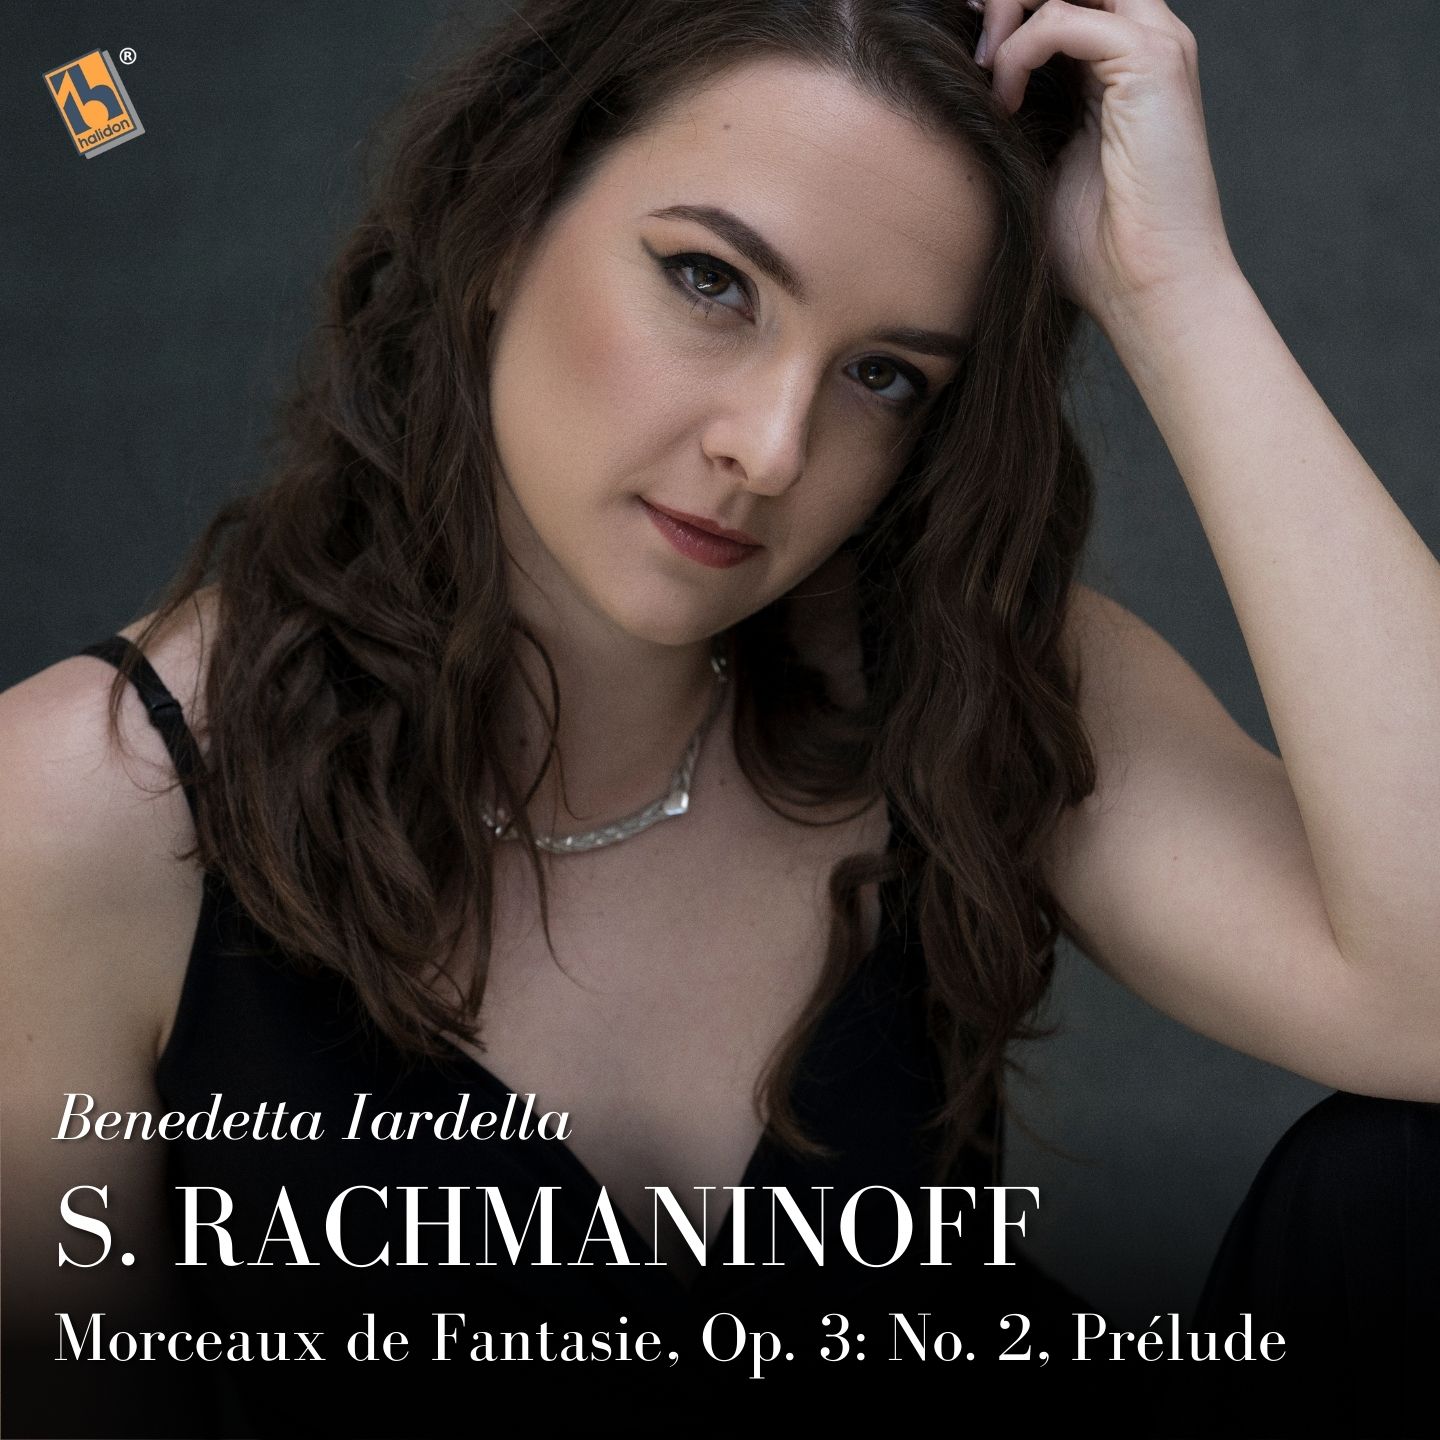 Rachmaninoff: Morceaux de Fantaisie, Op. 3: No. 2, Prélude (The Bells of Moscow)